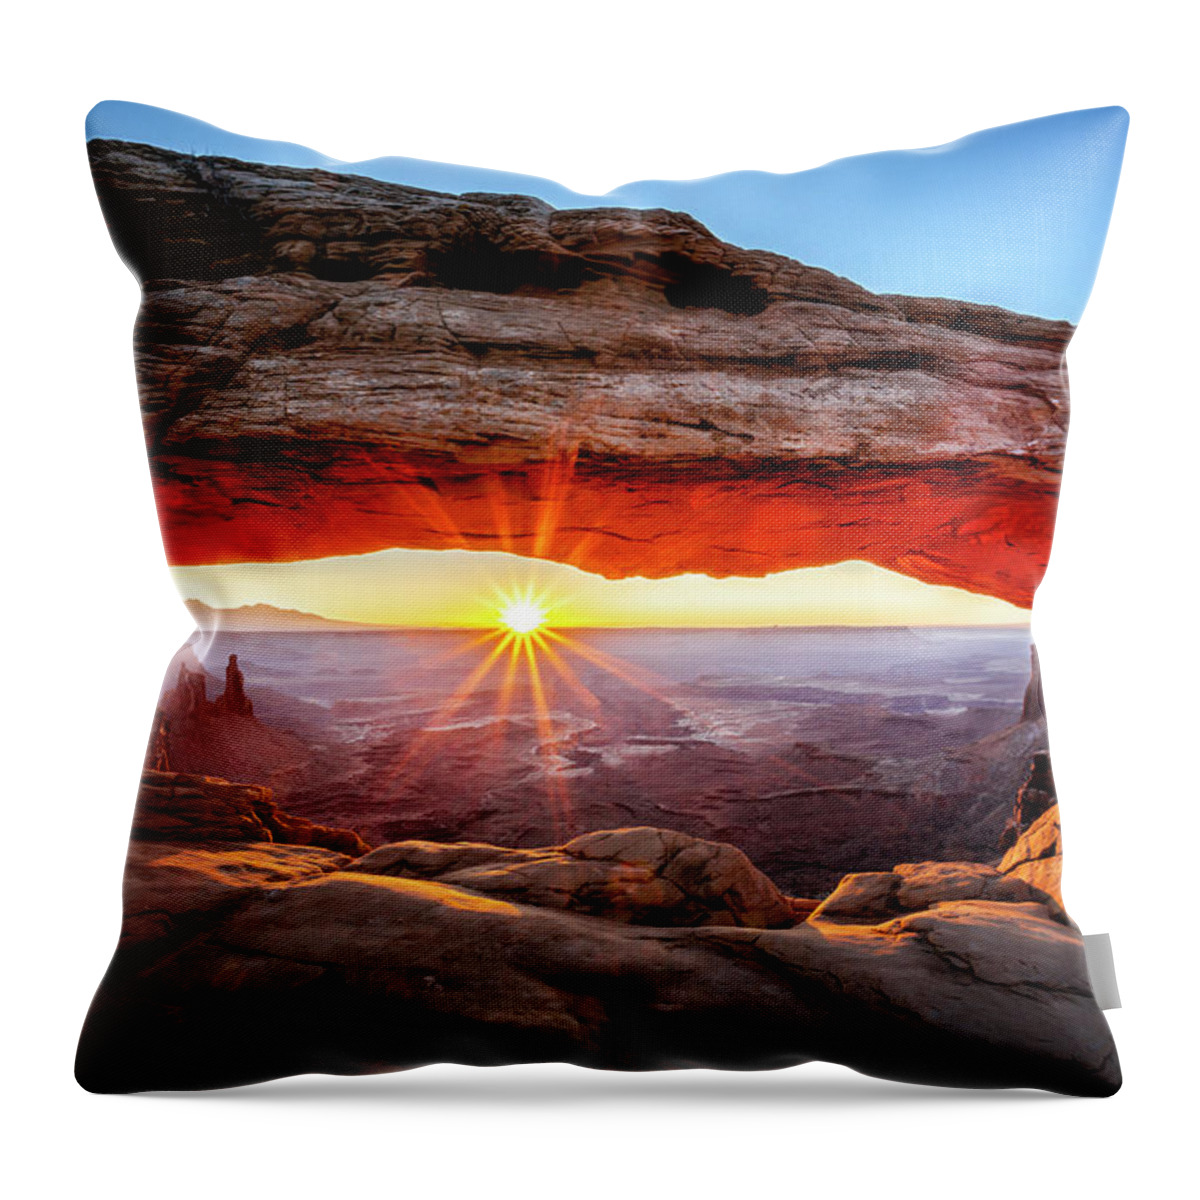 2020 Utah Trip Throw Pillow featuring the photograph Mesa Arch by Gary Johnson